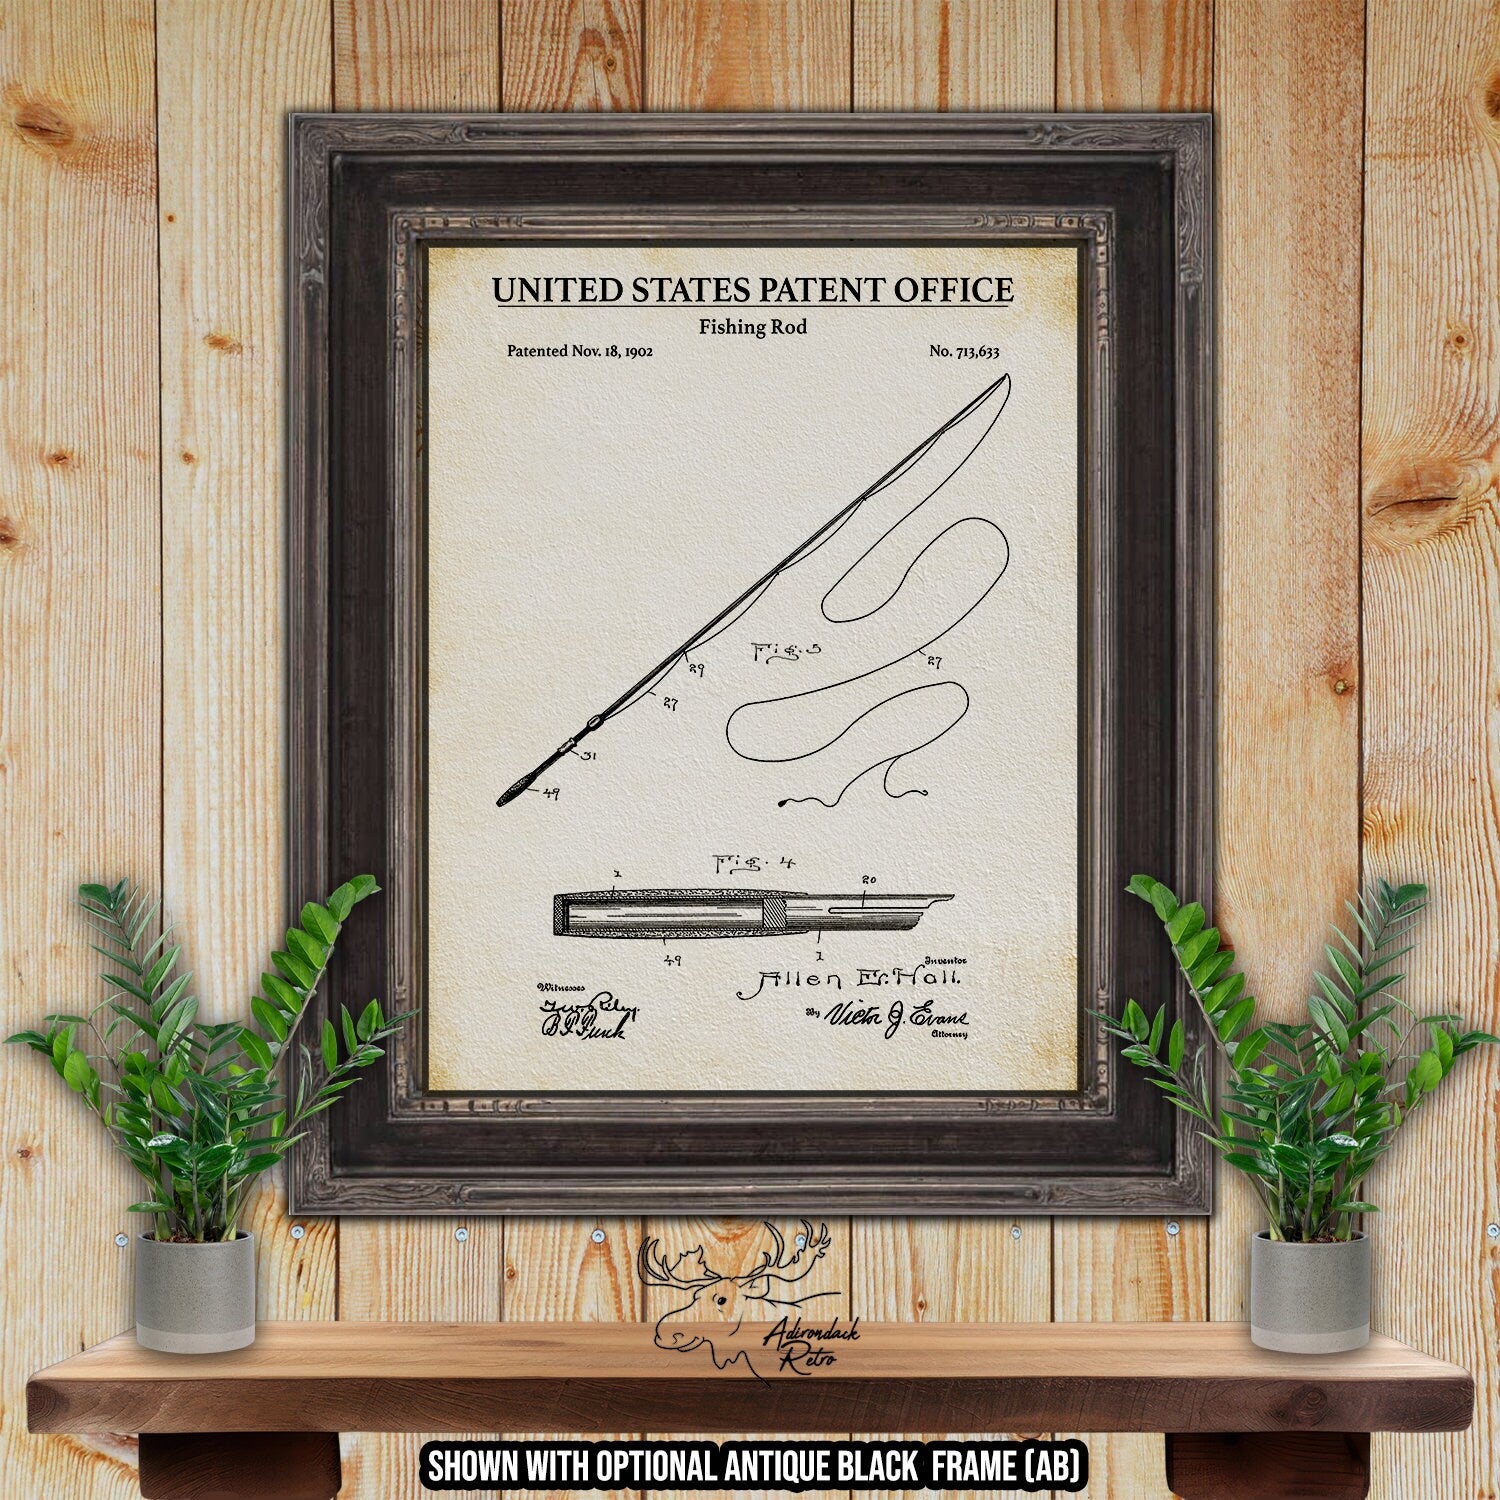 Fishing Pole Patent Print - 1902 Fishing Rod Invention at Adirondack Retro